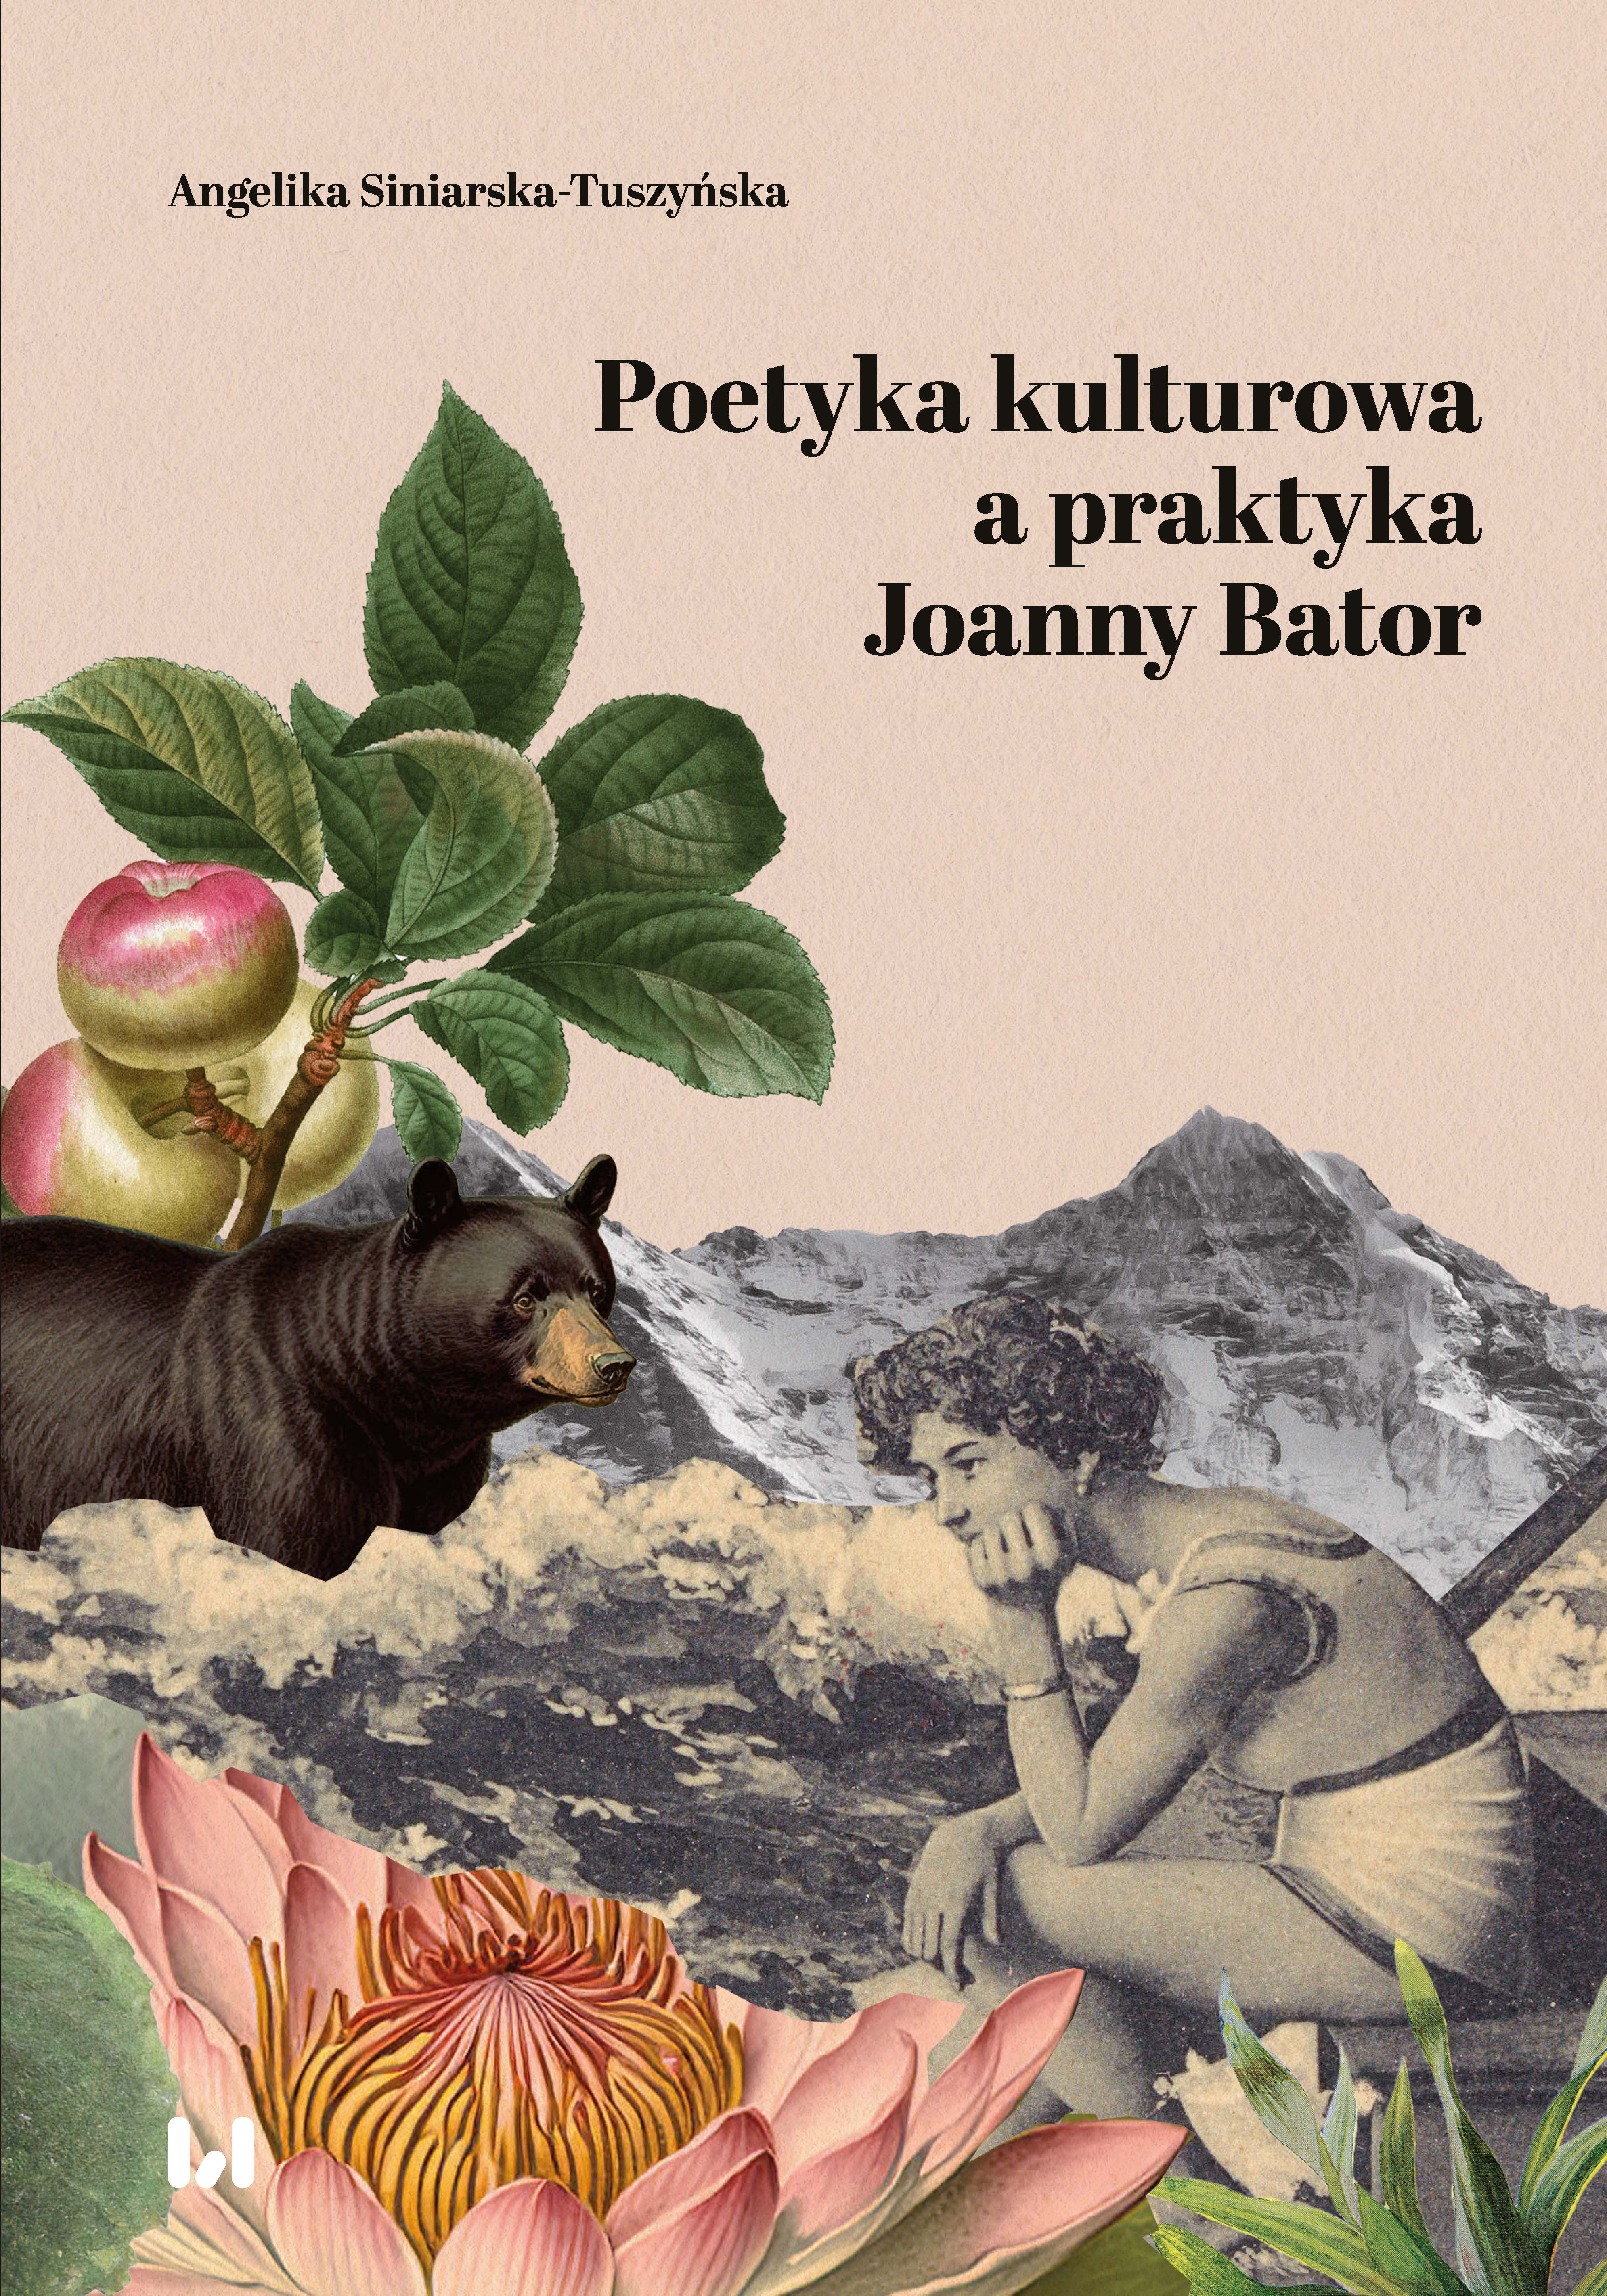 Cultural poetics and practice of Joanna Bator